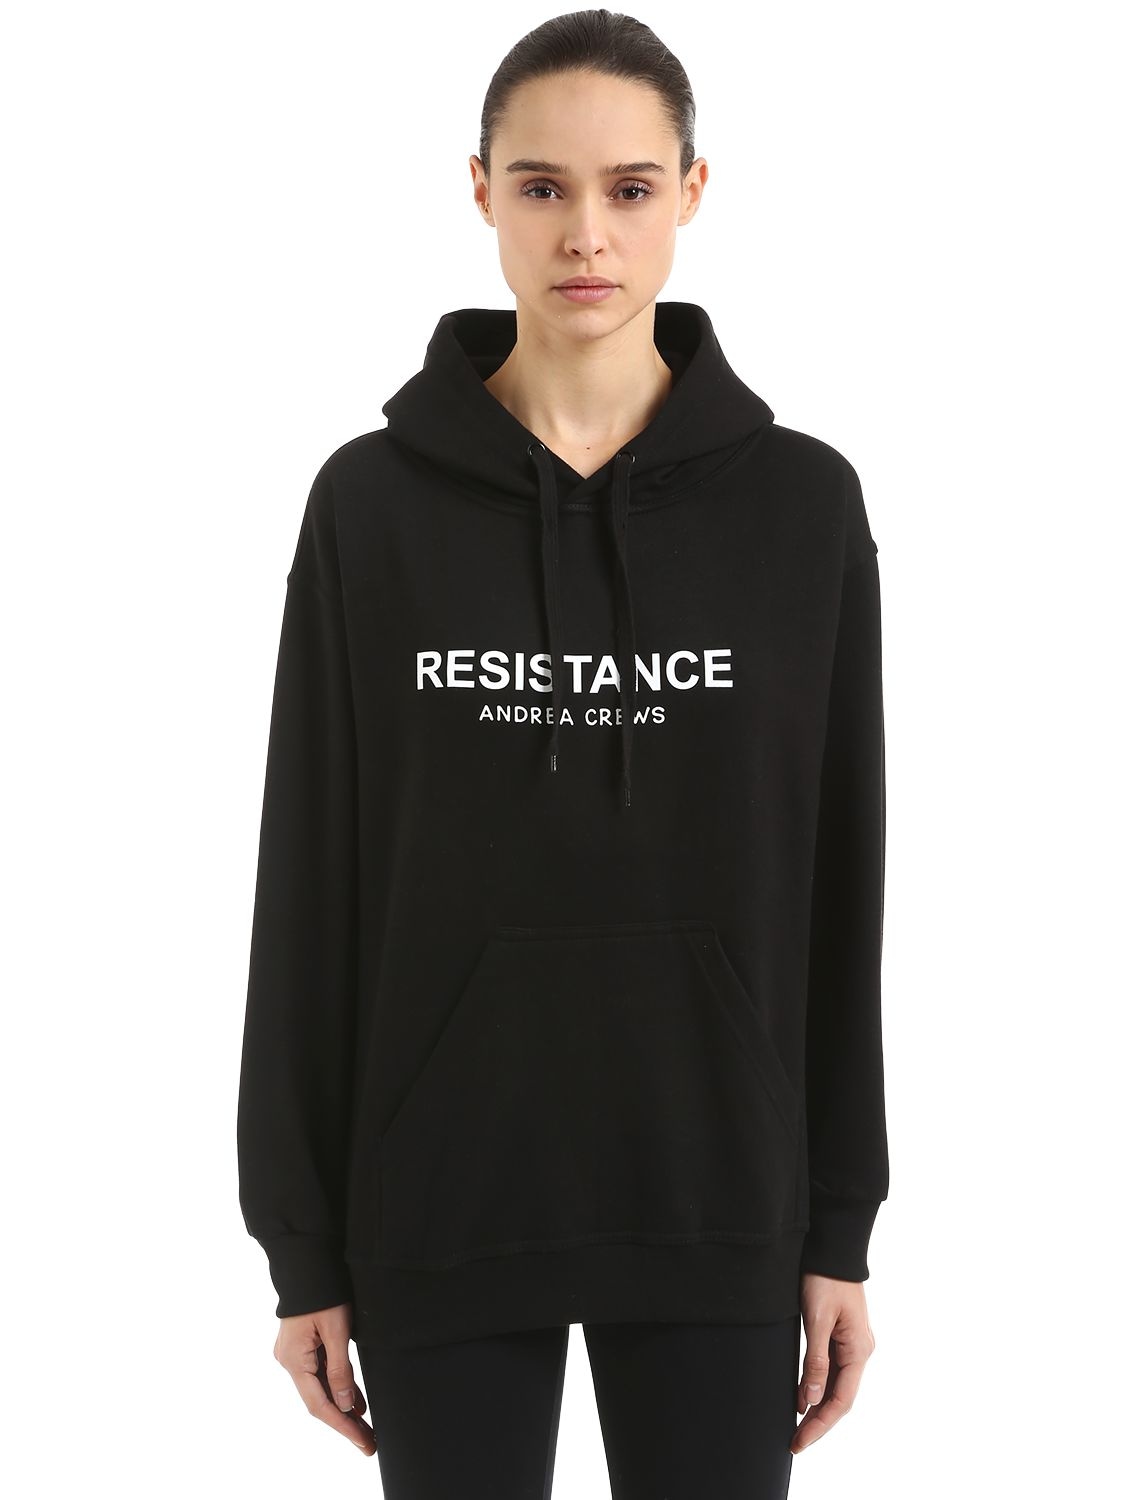 Andrea Crews Resistance Cotton Blend Sweatshirt In Black